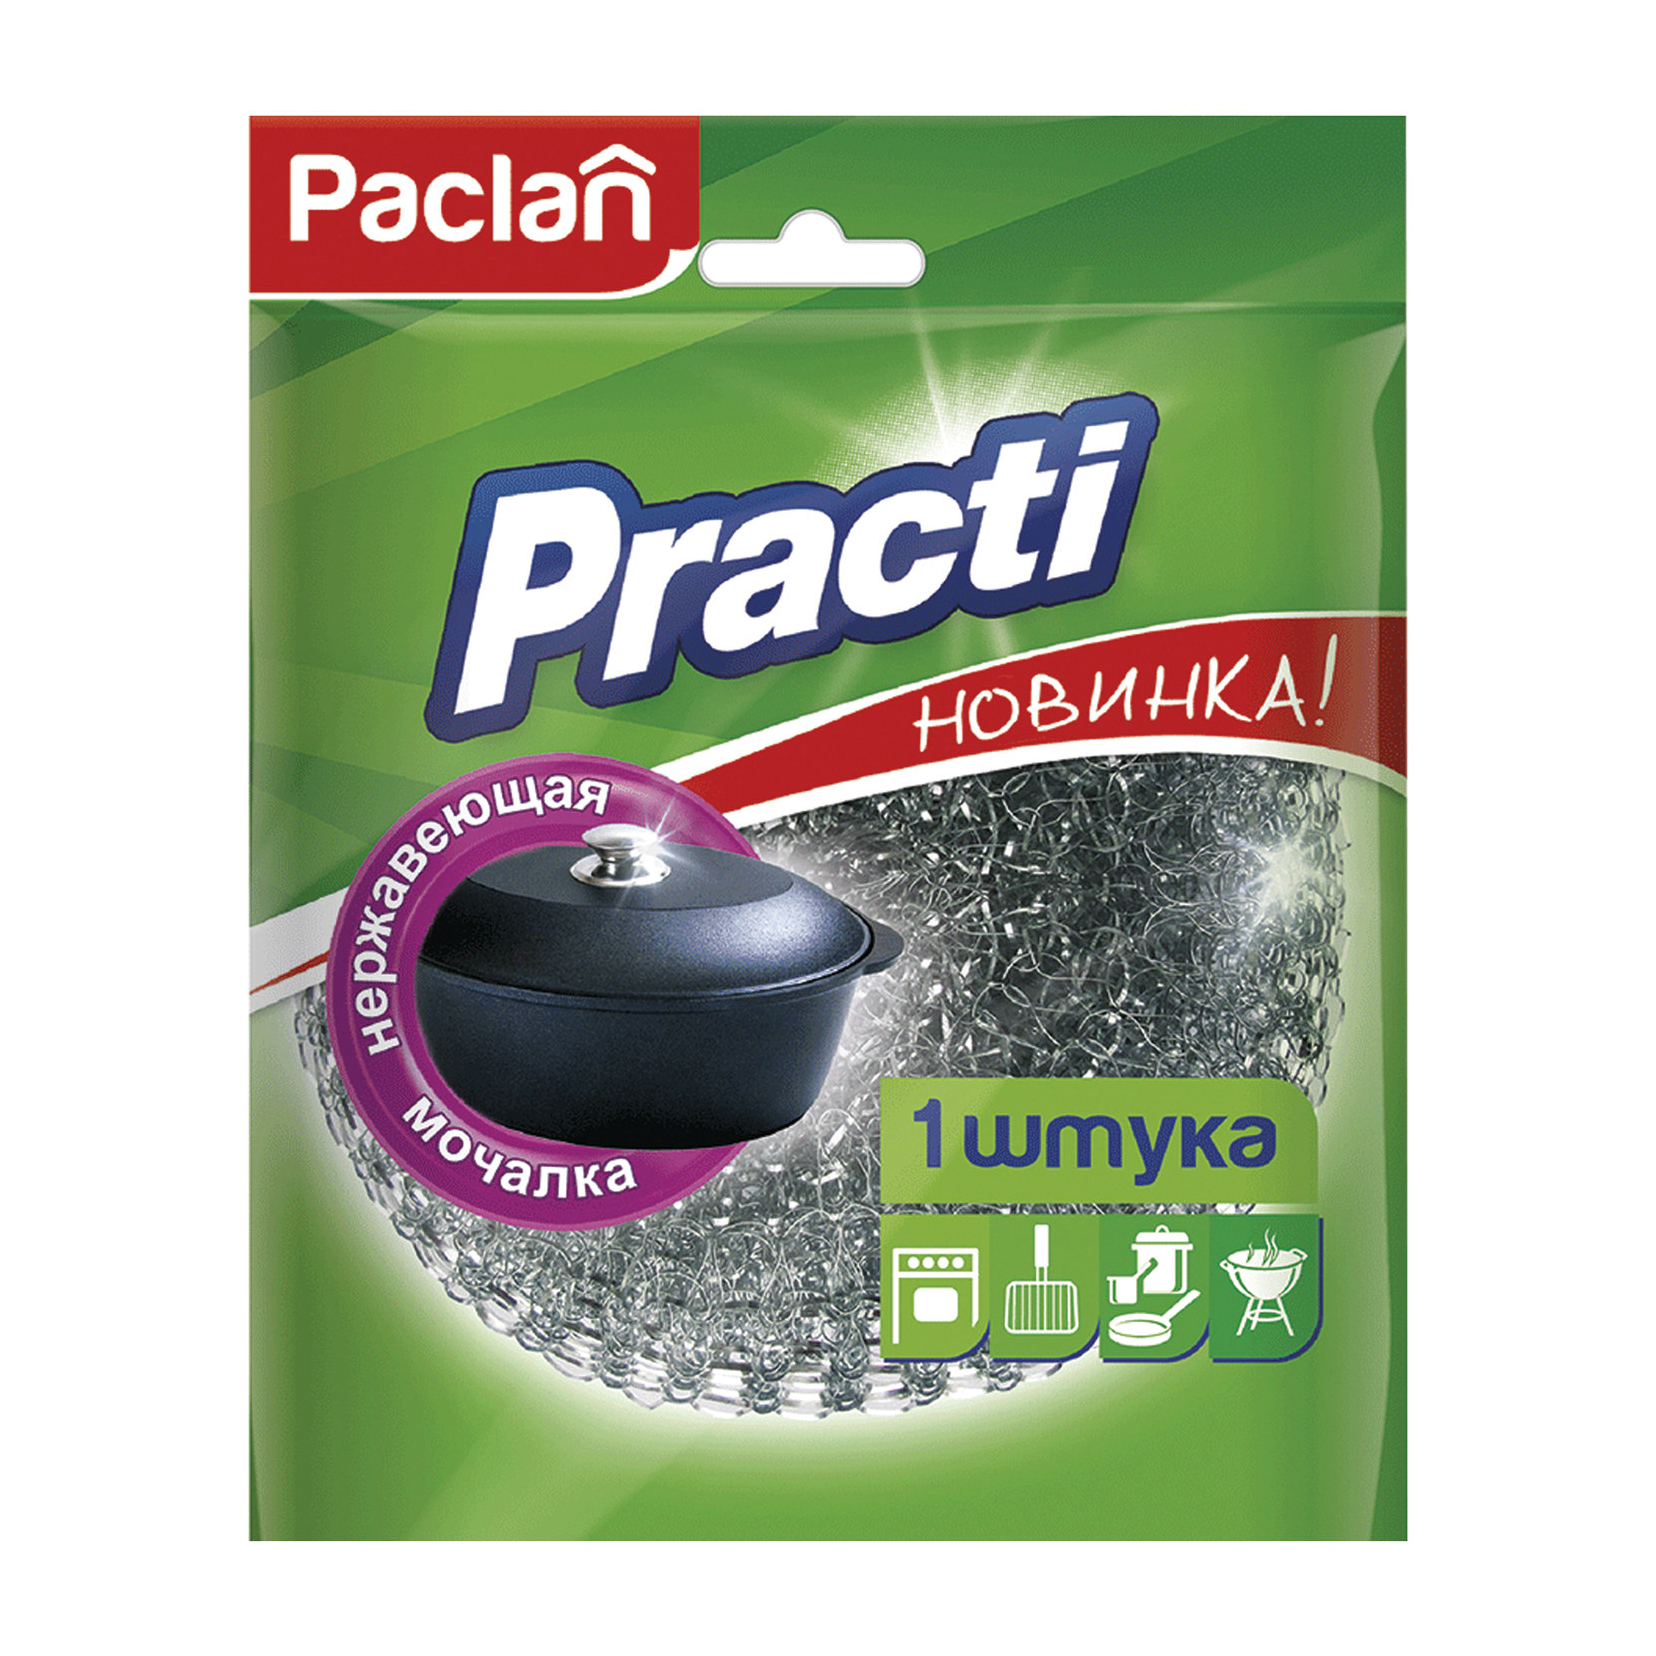 Мочалка для посуды металическая Paclan Practi 1 шт мочалка paclan металлическая для хозяйственных нужд 1 шт